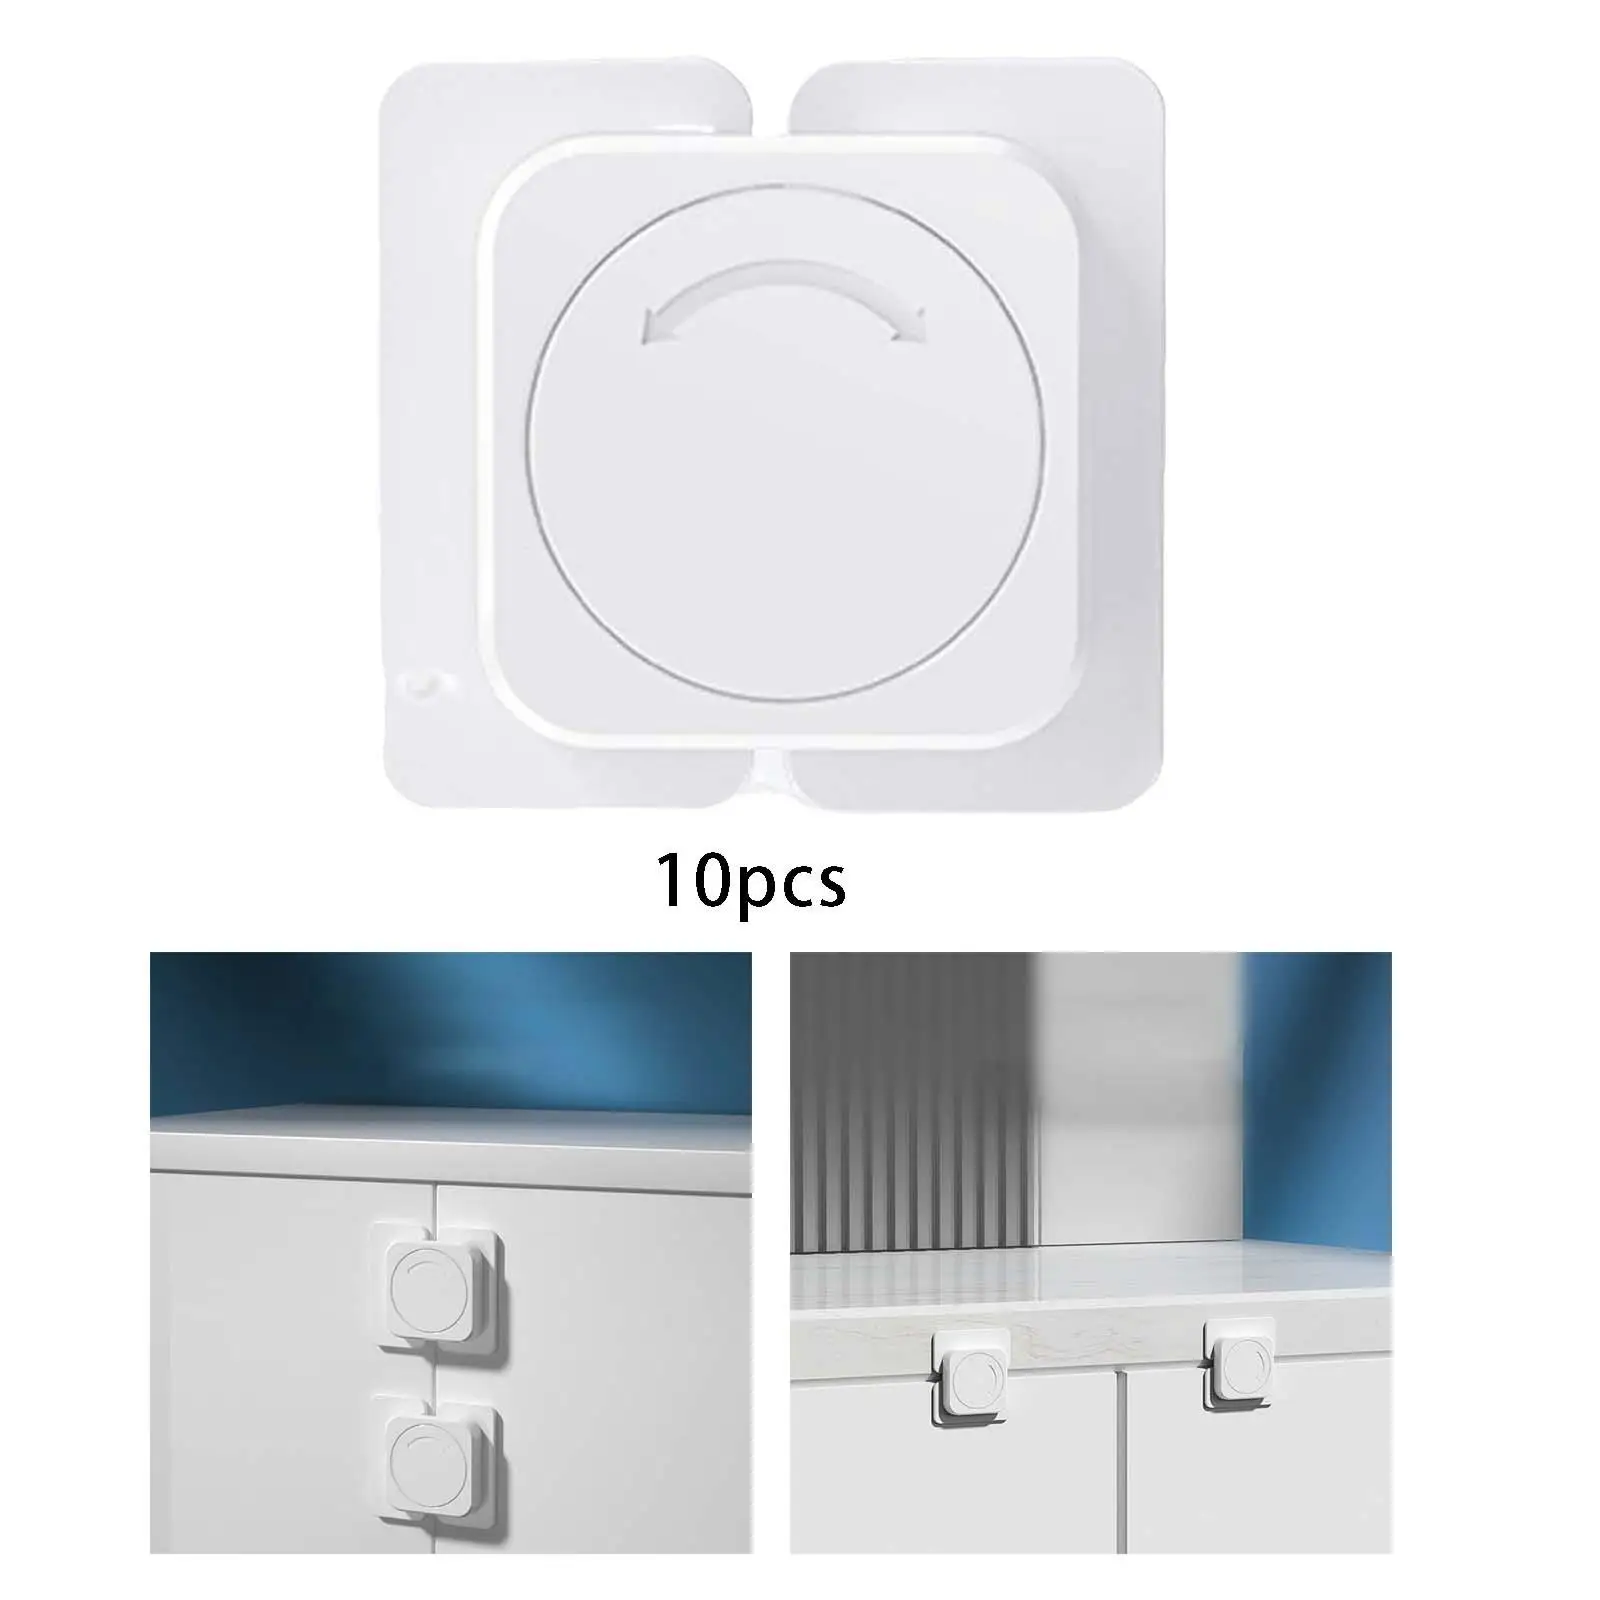 10Pcs Rotary Lock Protection Door Locks for Drawers   Freezer